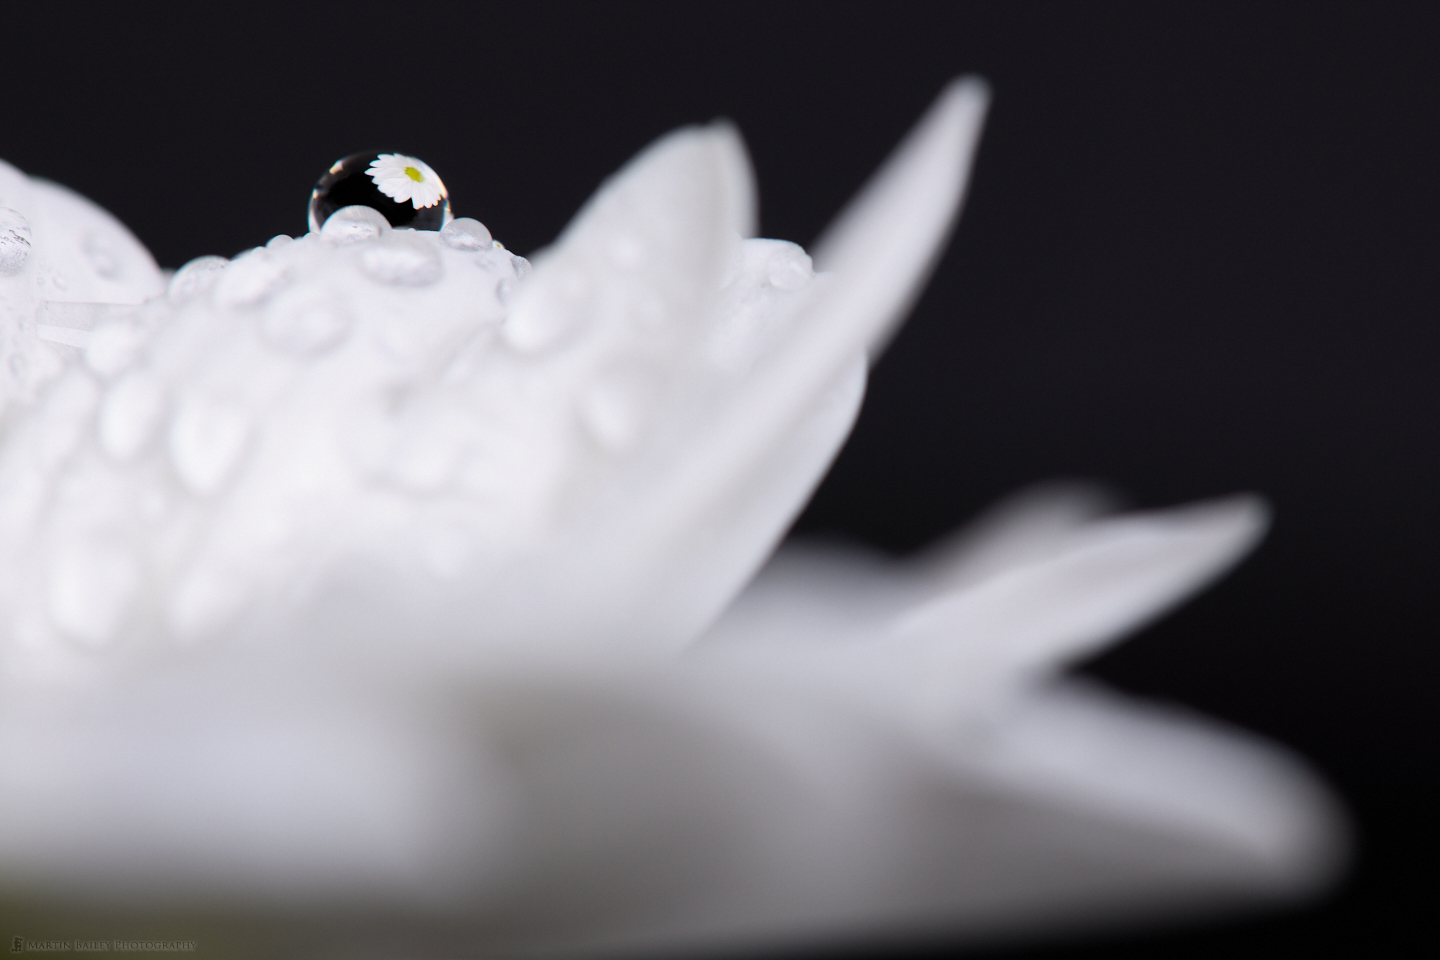 Flower in Droplet #2